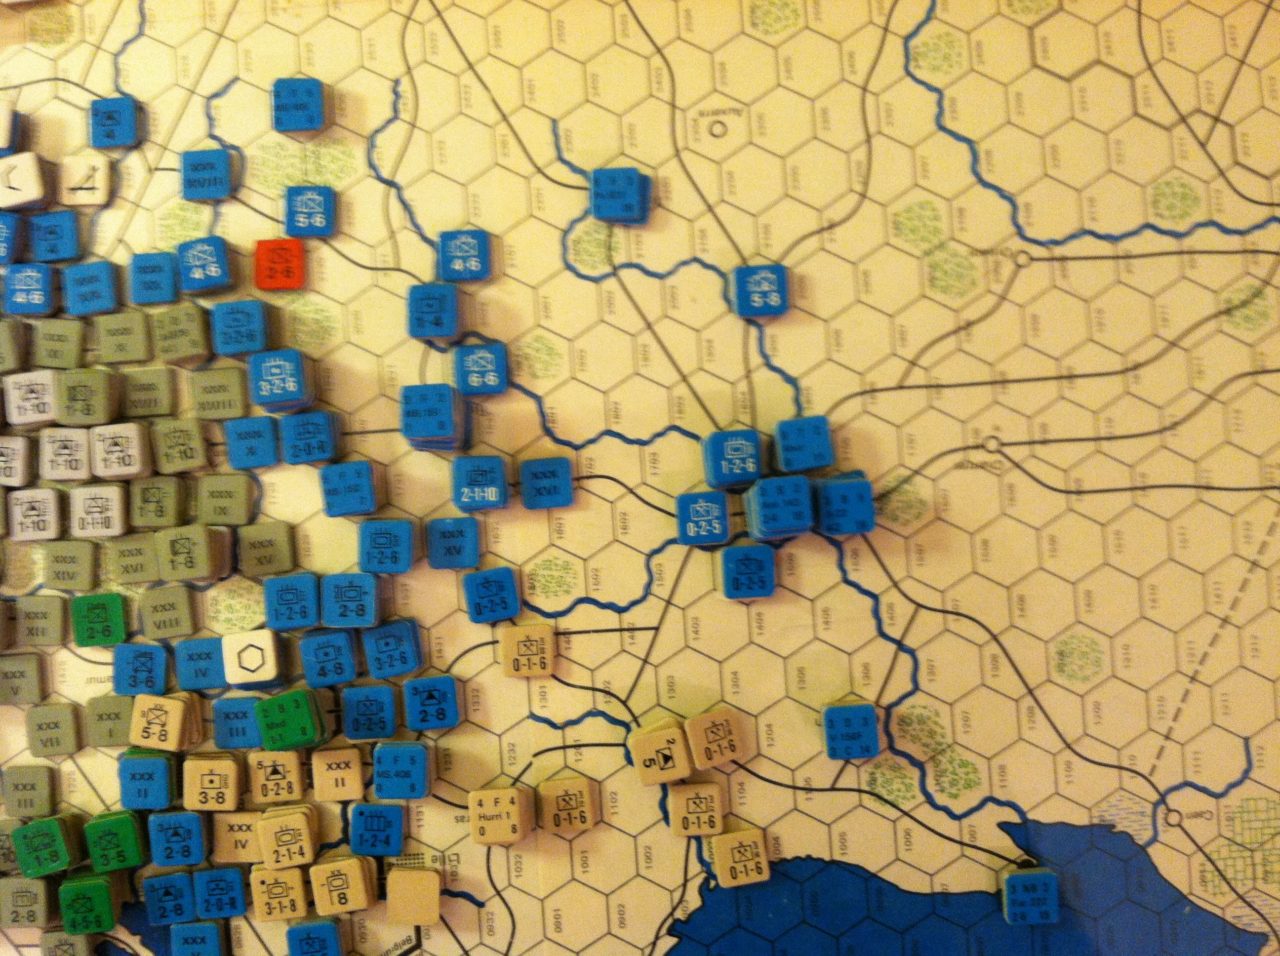 May II 40: Paris prepares for defence